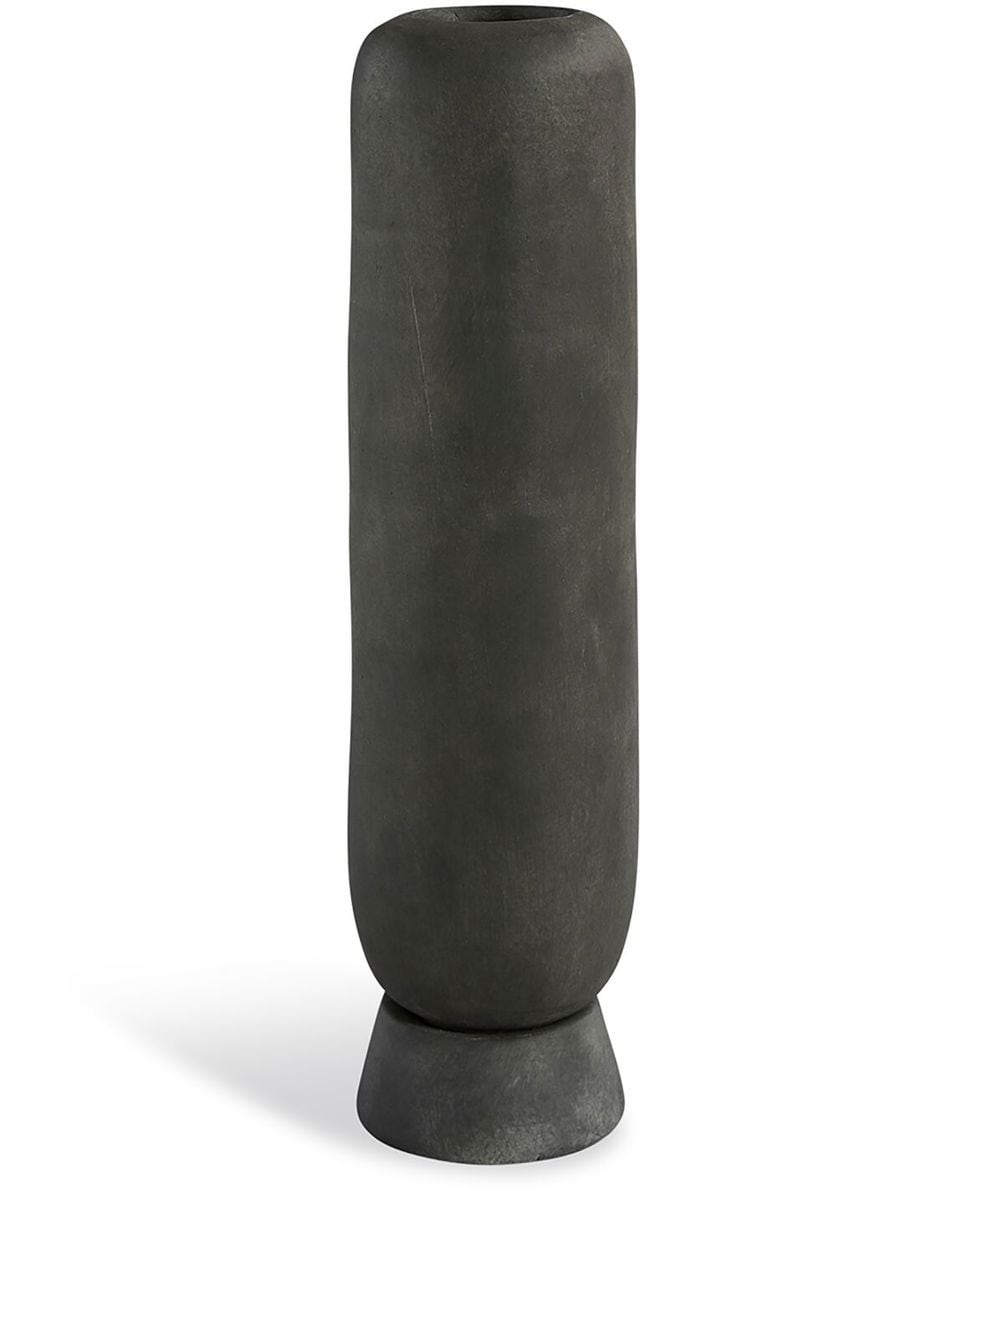 101 Copenhagen Kabin Tall Vase In Grau